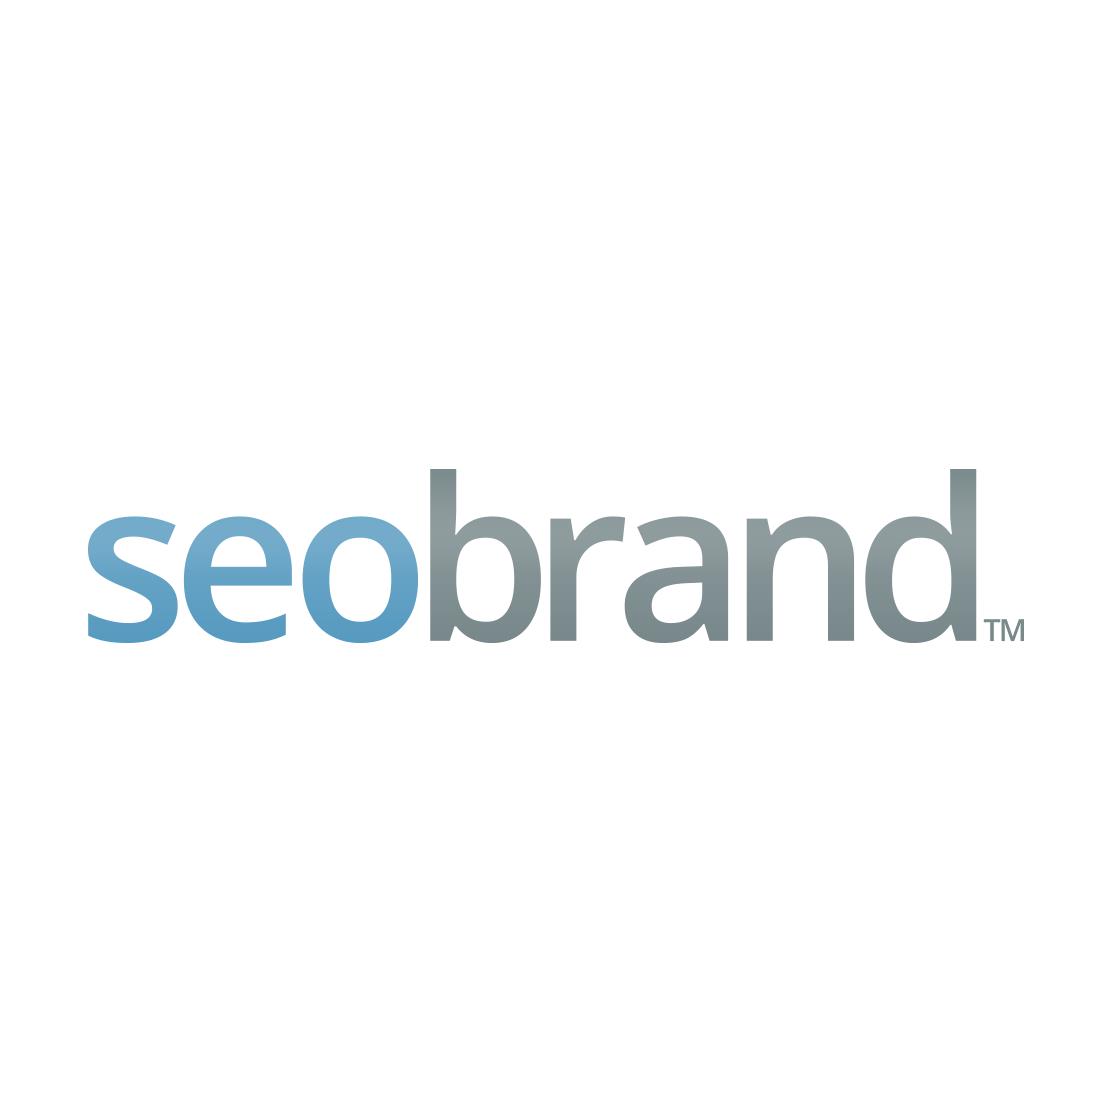 Best New York SEO Company Logo: SEO Brand